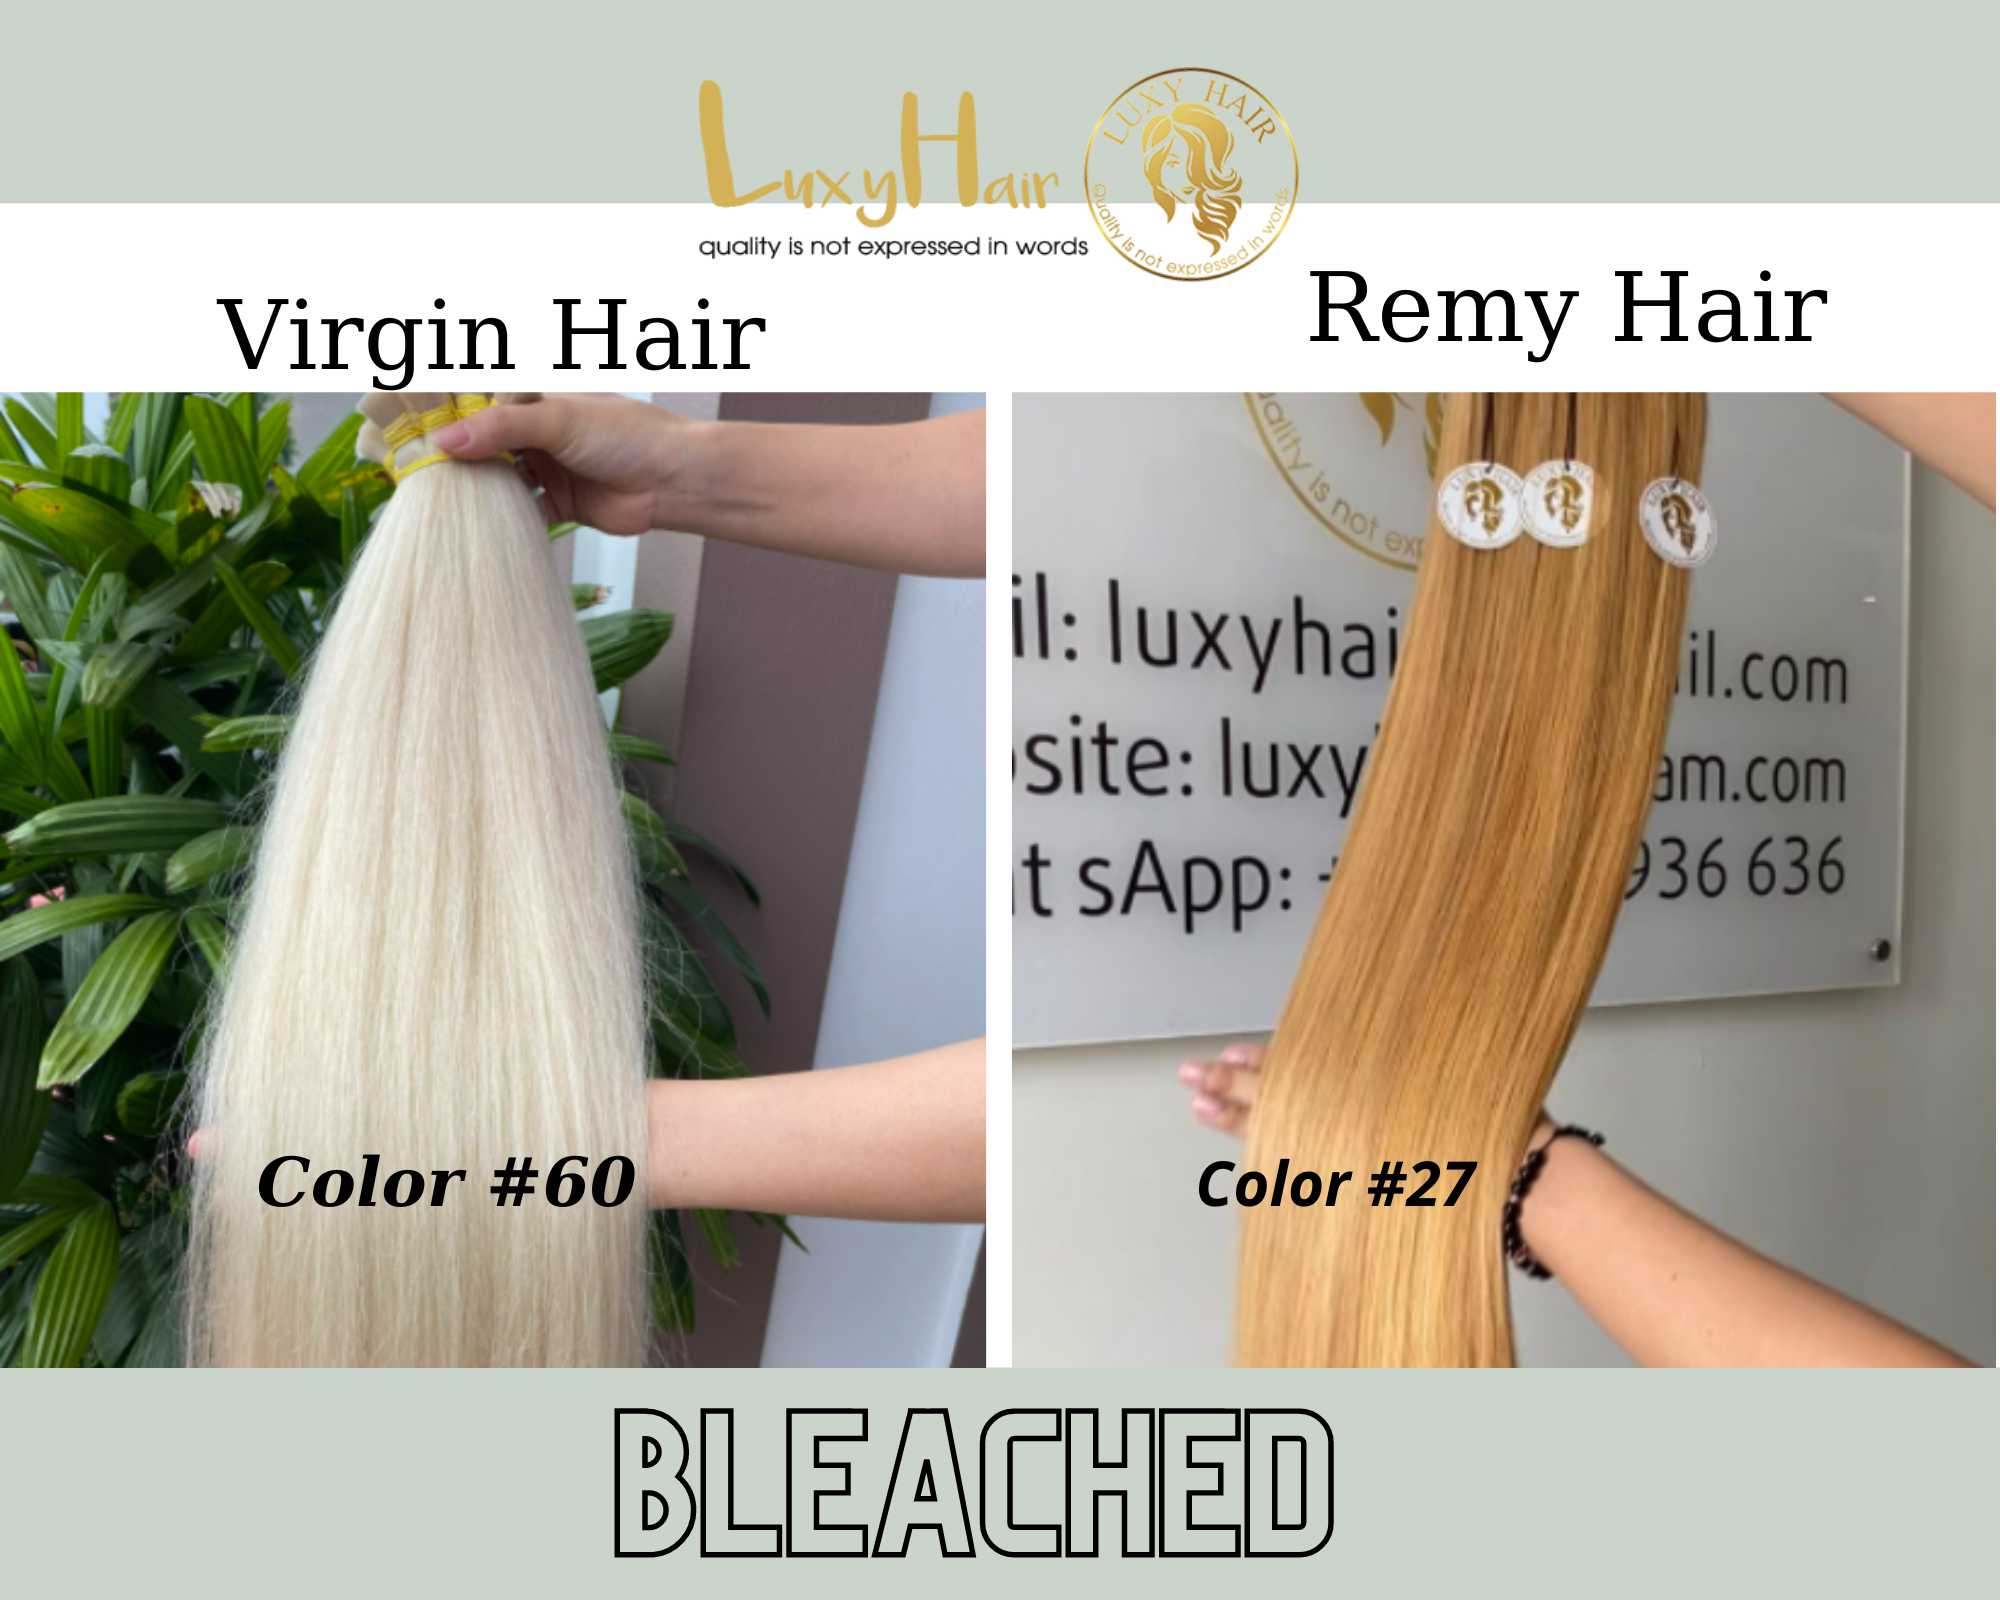 Bleached-Color-Virgin-hair-Remy-Hair